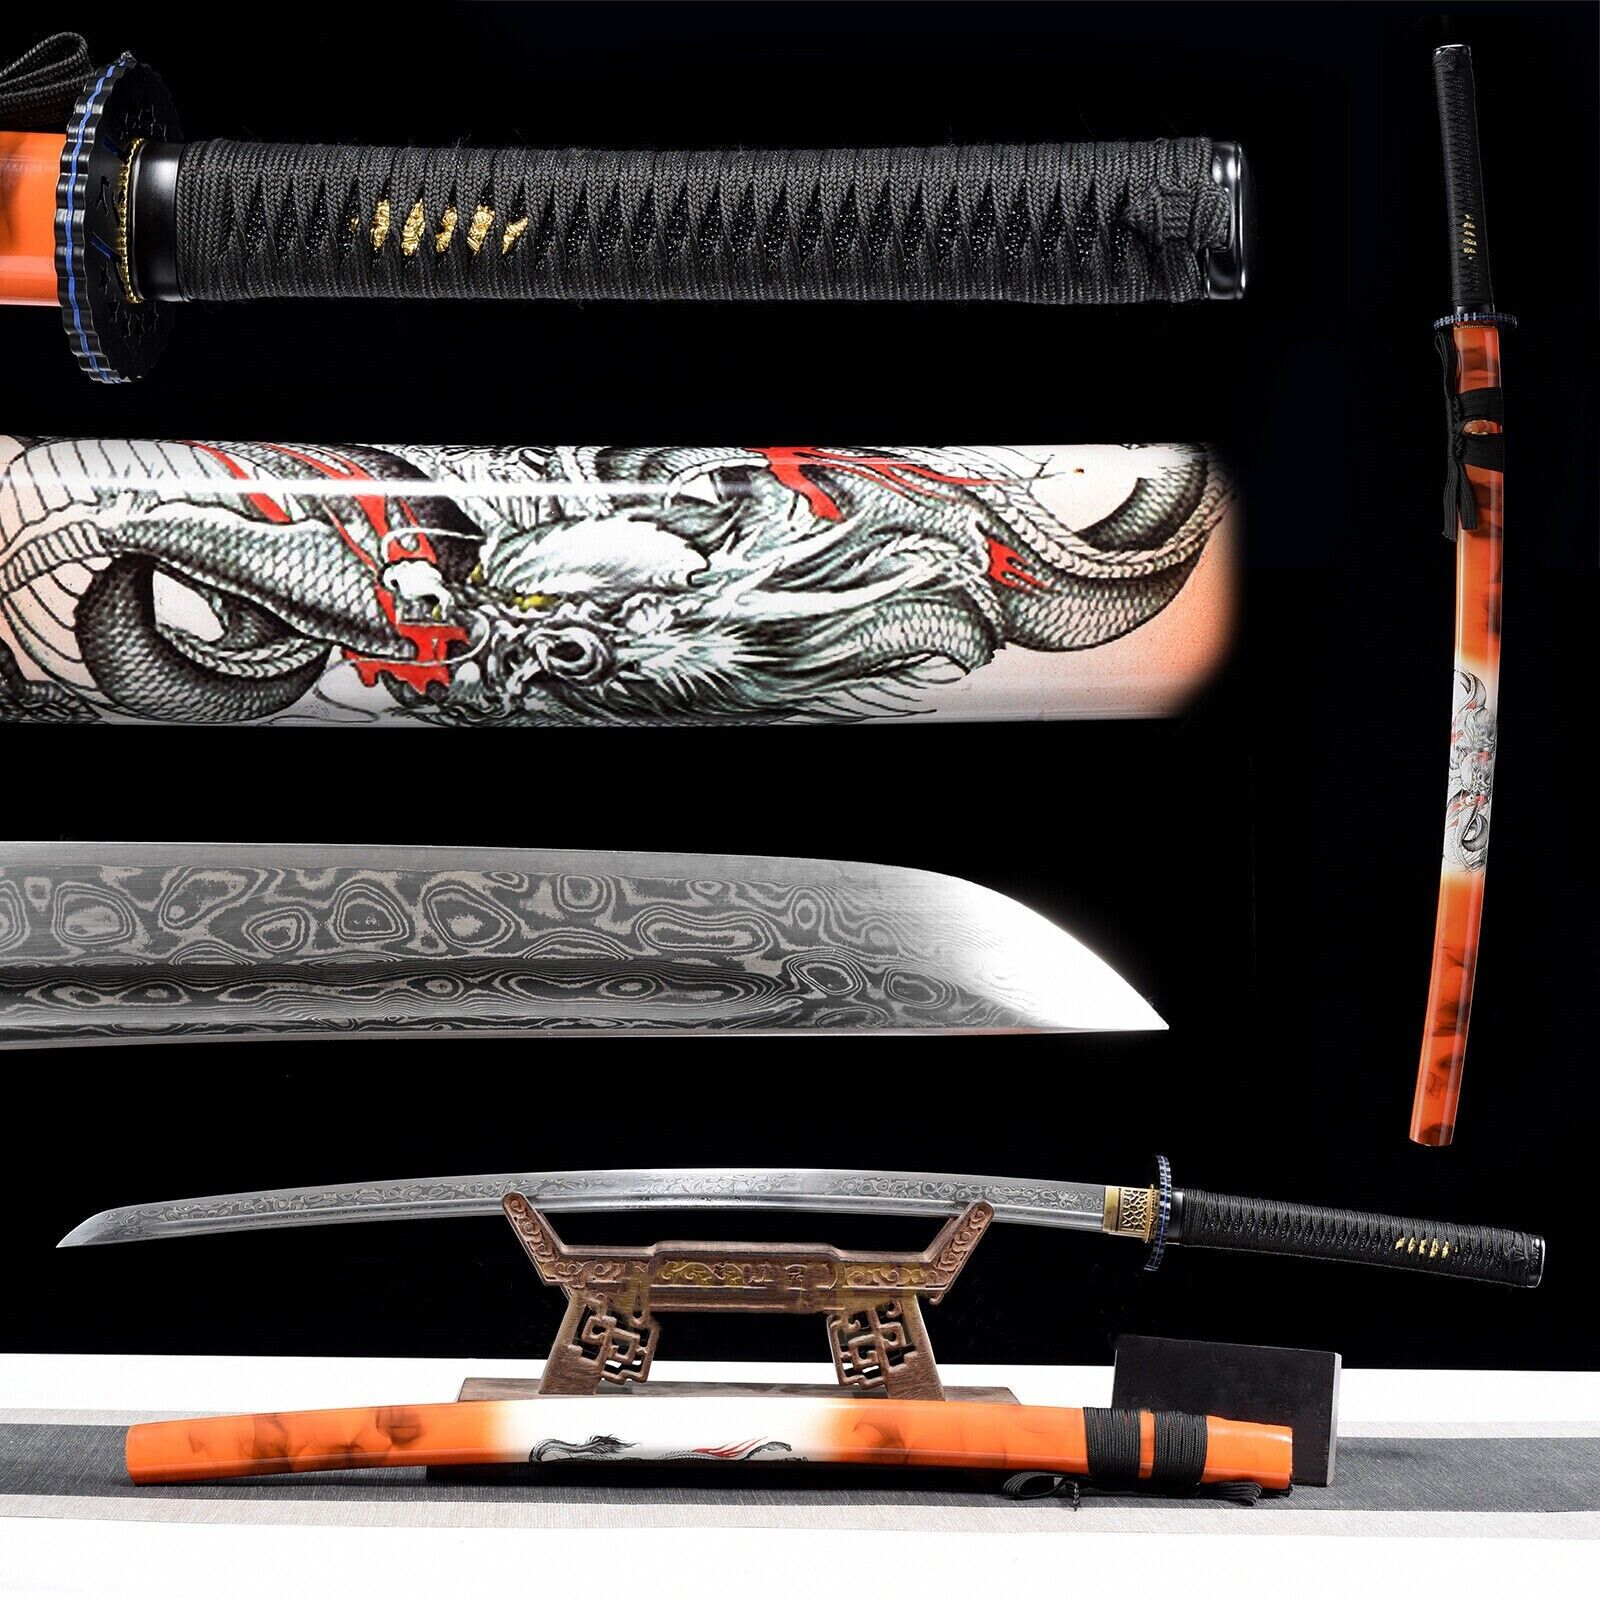 Damascus Folded Steel Katana Battle Ready Japanese Samurai Sharp Sword Handmade